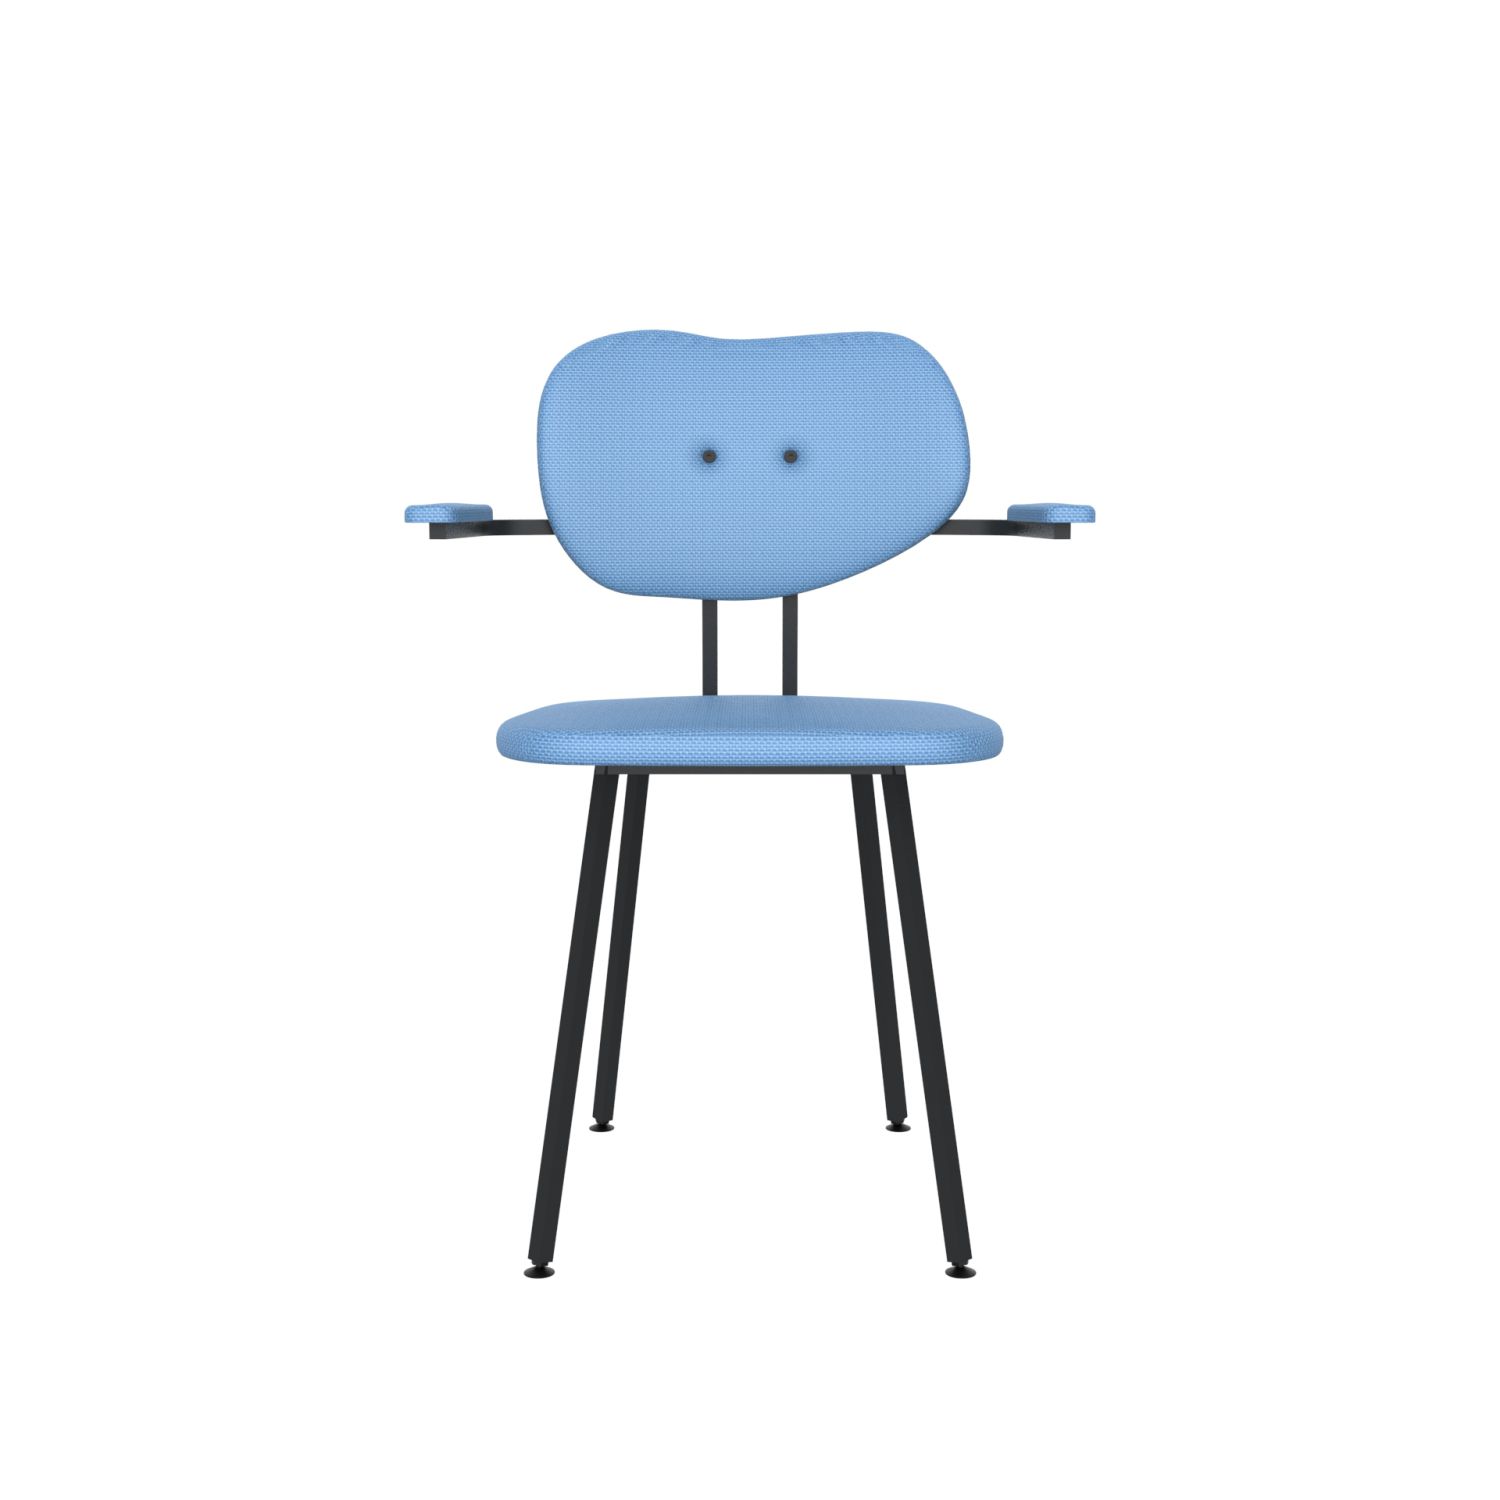 lensvelt maarten baas chair 102 not stackable with armrests backrest b blue horizon 040 black ral9005 hard leg ends